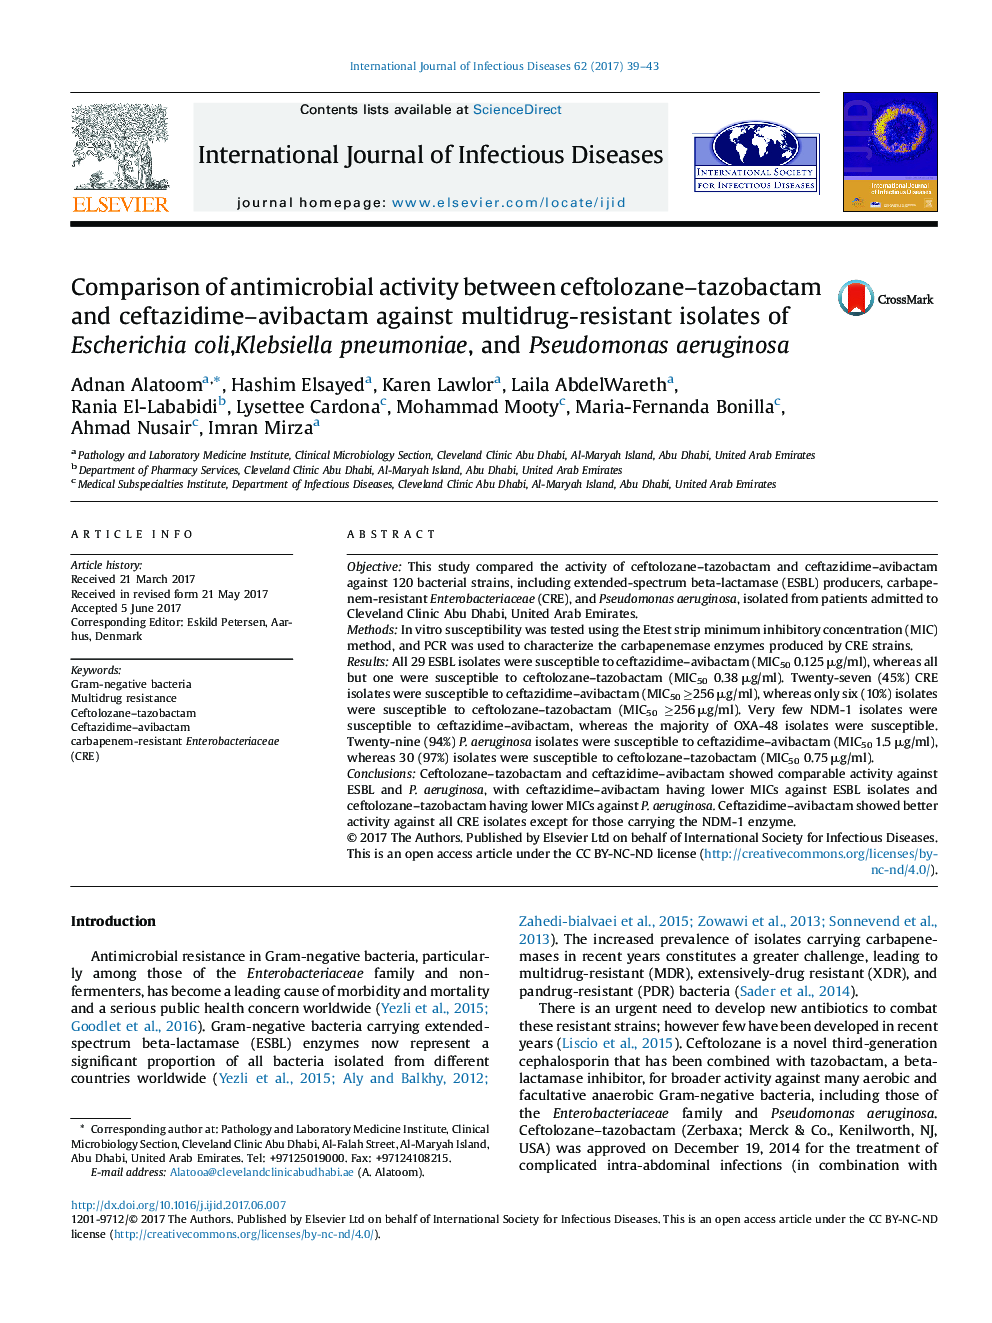 Comparison of antimicrobial activity between ceftolozane-tazobactam and ceftazidime-avibactam against multidrug-resistant isolates of Escherichia coli, Klebsiella pneumoniae, and Pseudomonas aeruginosa